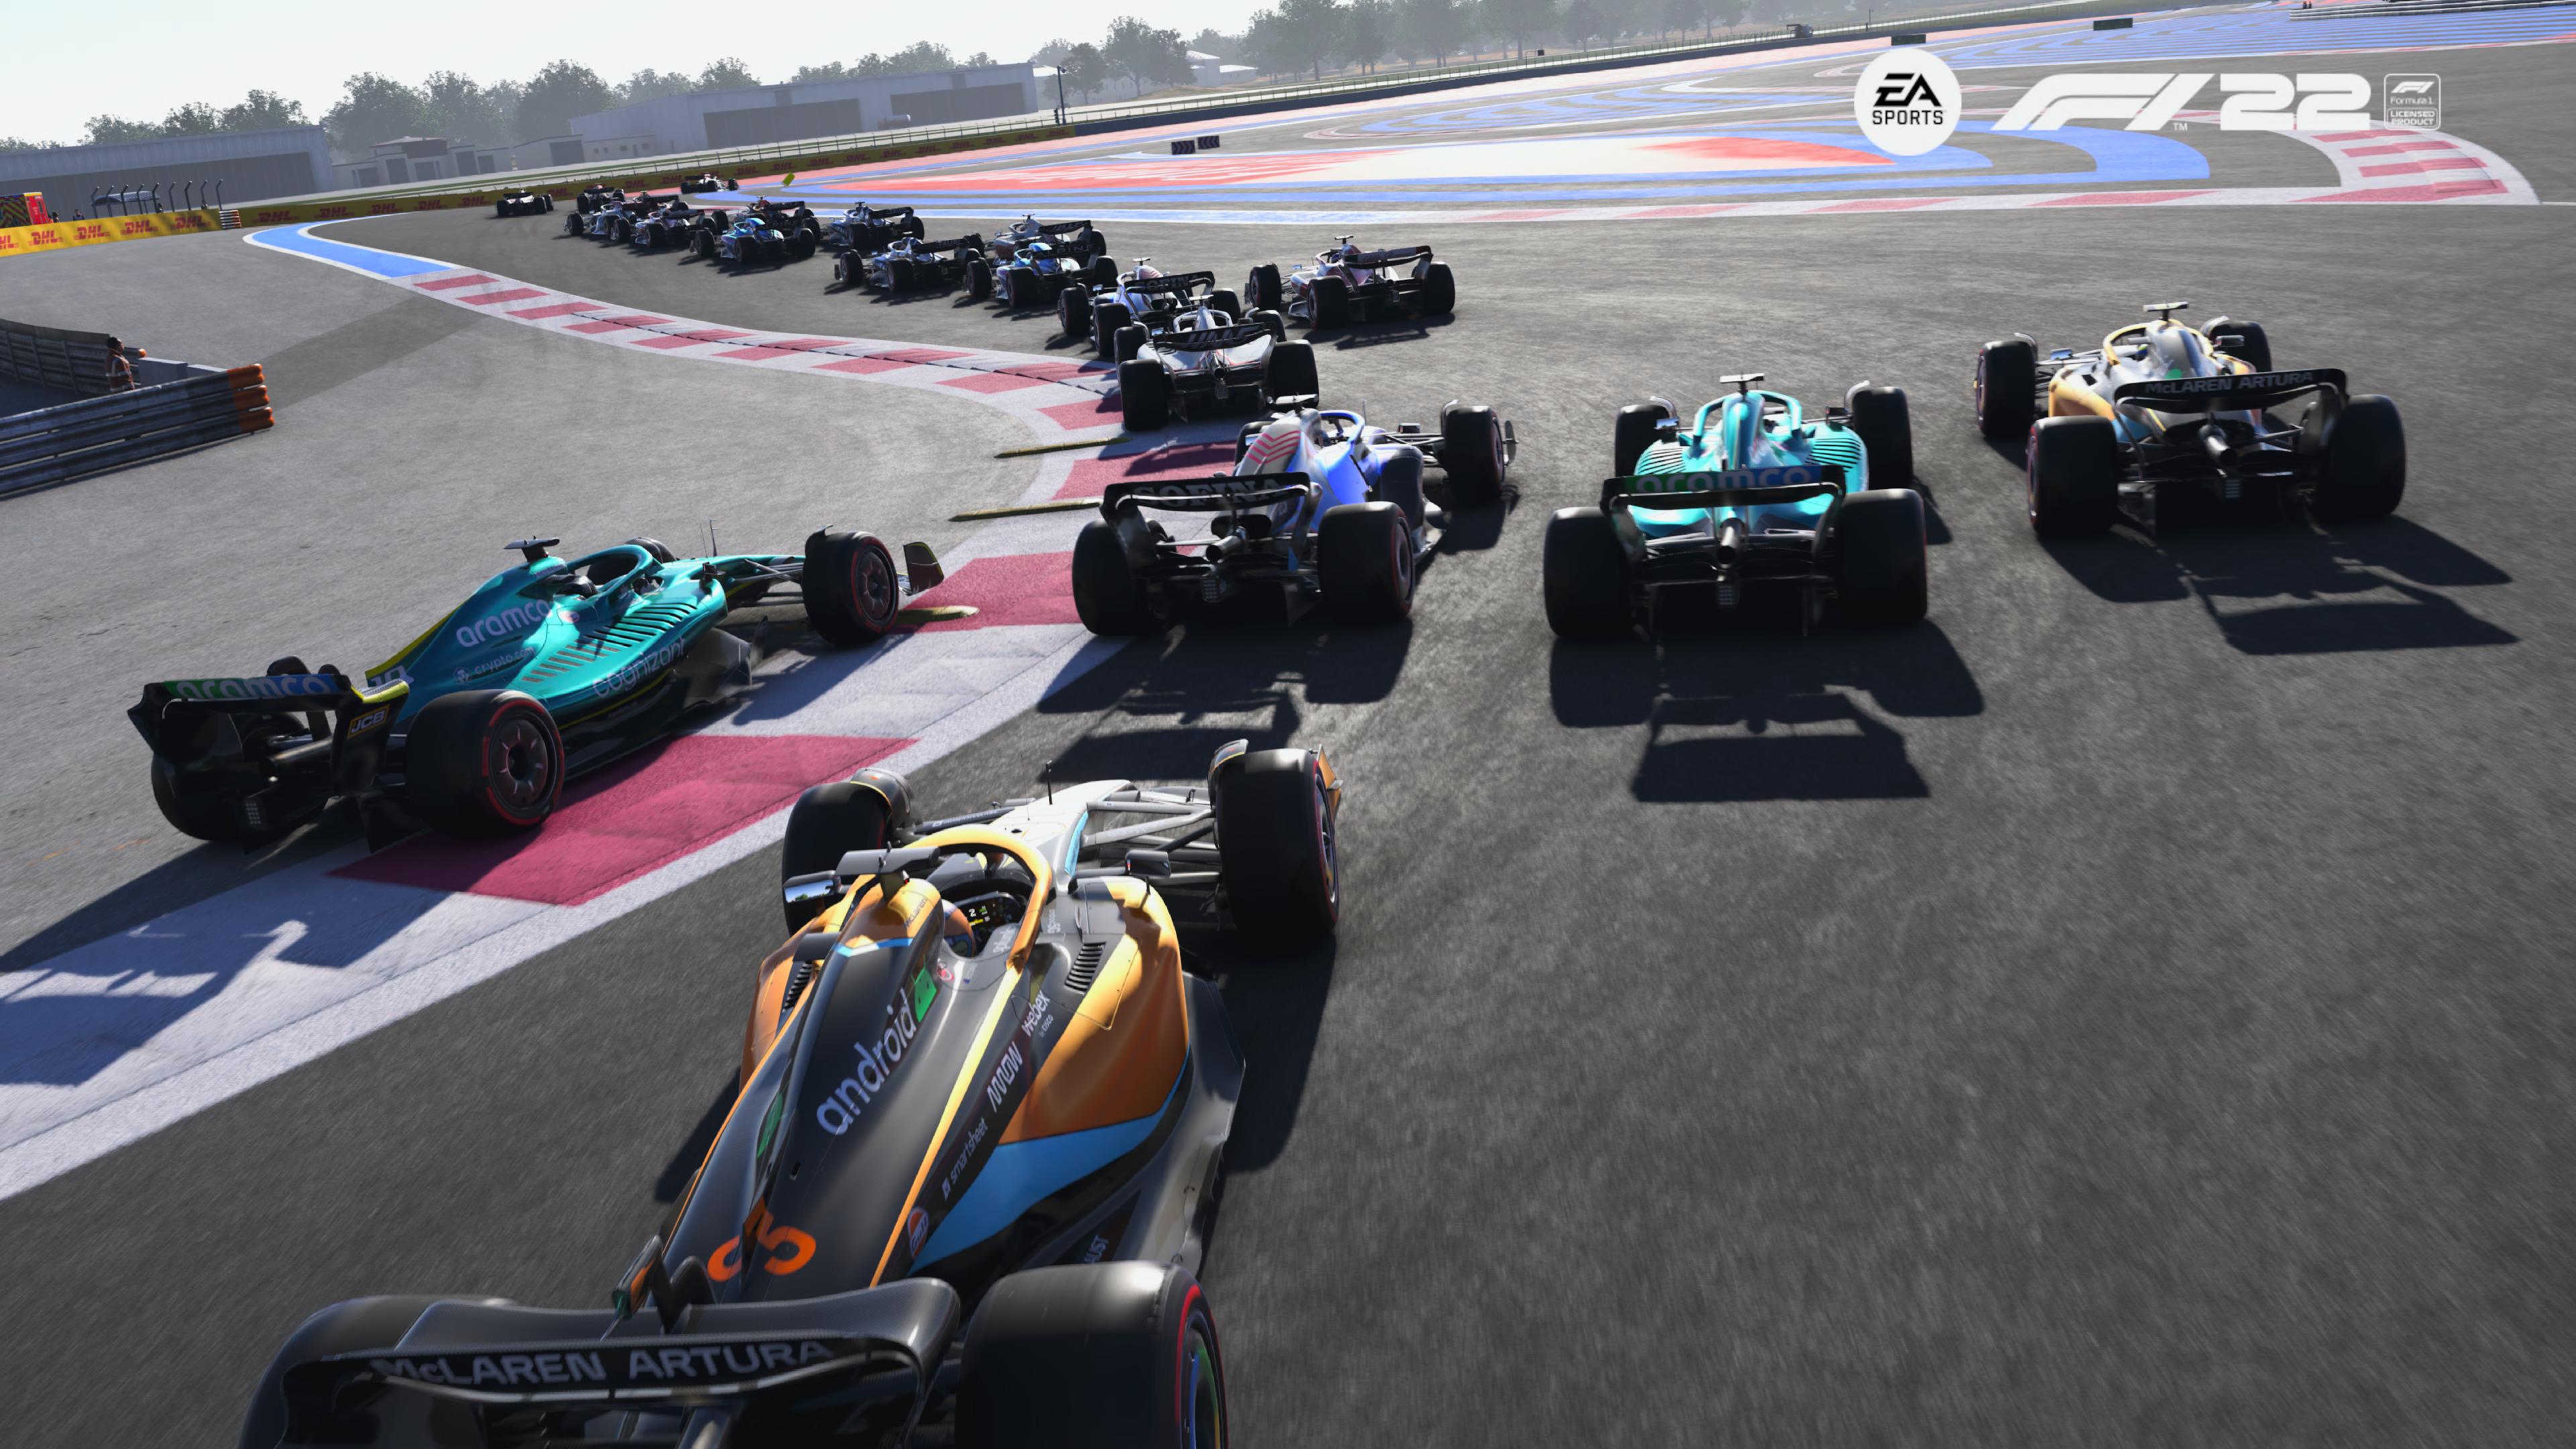 Weekly racing game news roundup 5 August: Portimao returns to F1 22, F1 22  cross-play coming, Forza Horizon 5 Donut Media DLC & more